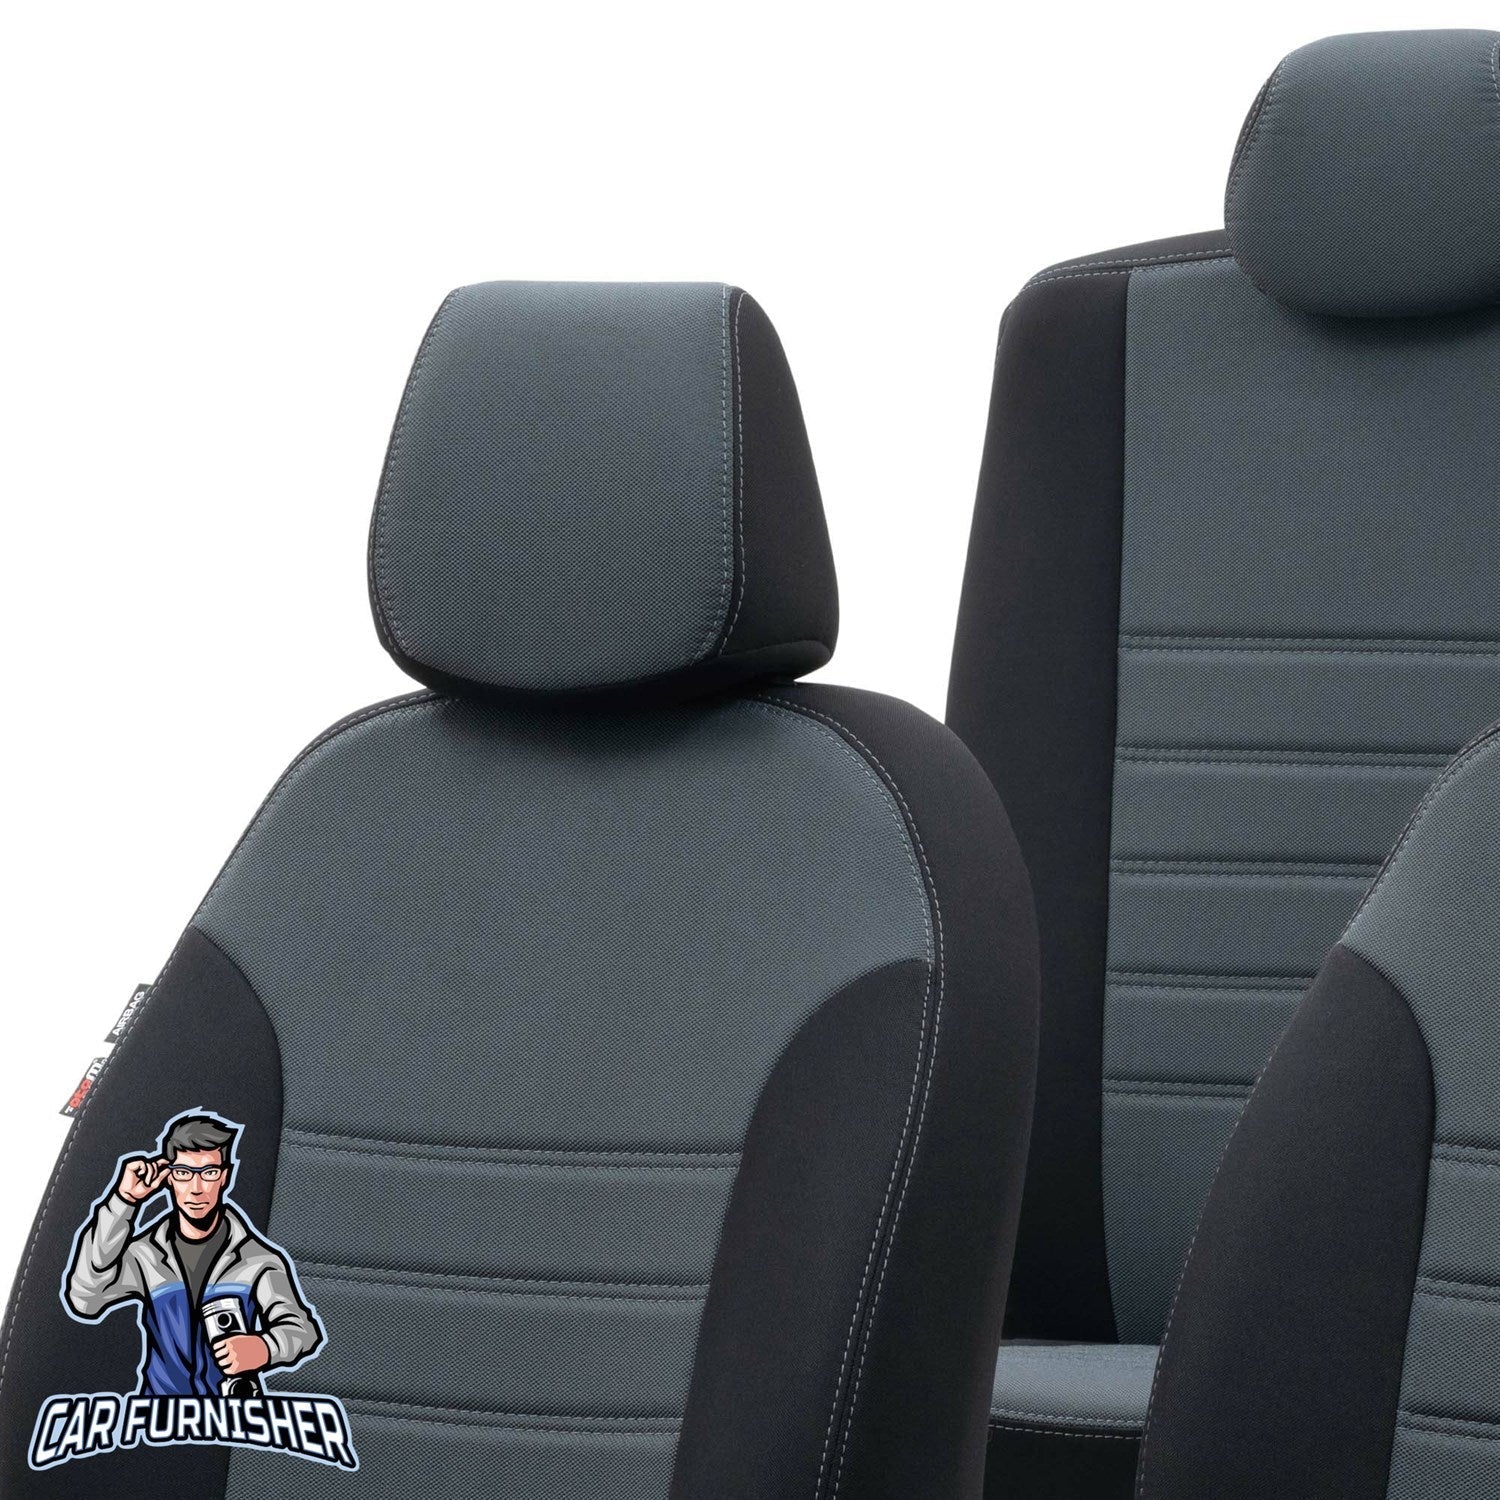 Geely Emgrand Seat Covers Original Jacquard Design Smoked Black Jacquard Fabric